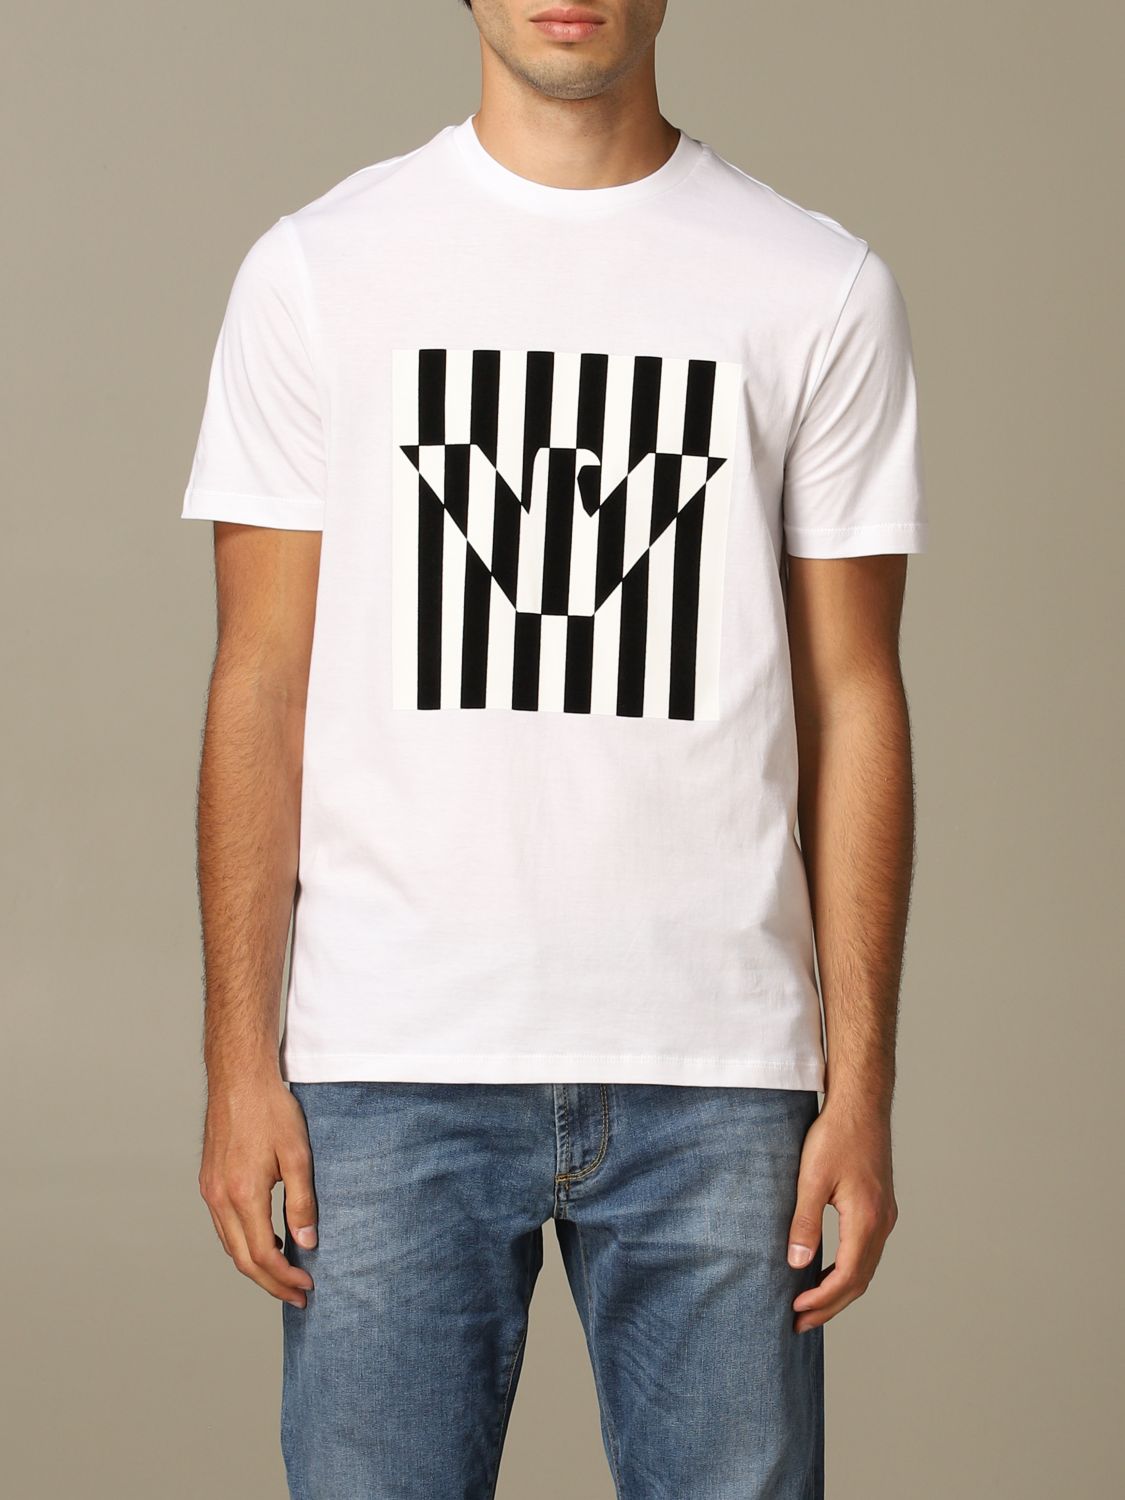 Giorgio Armani T Shirt Store, 58% OFF | www.ingeniovirtual.com